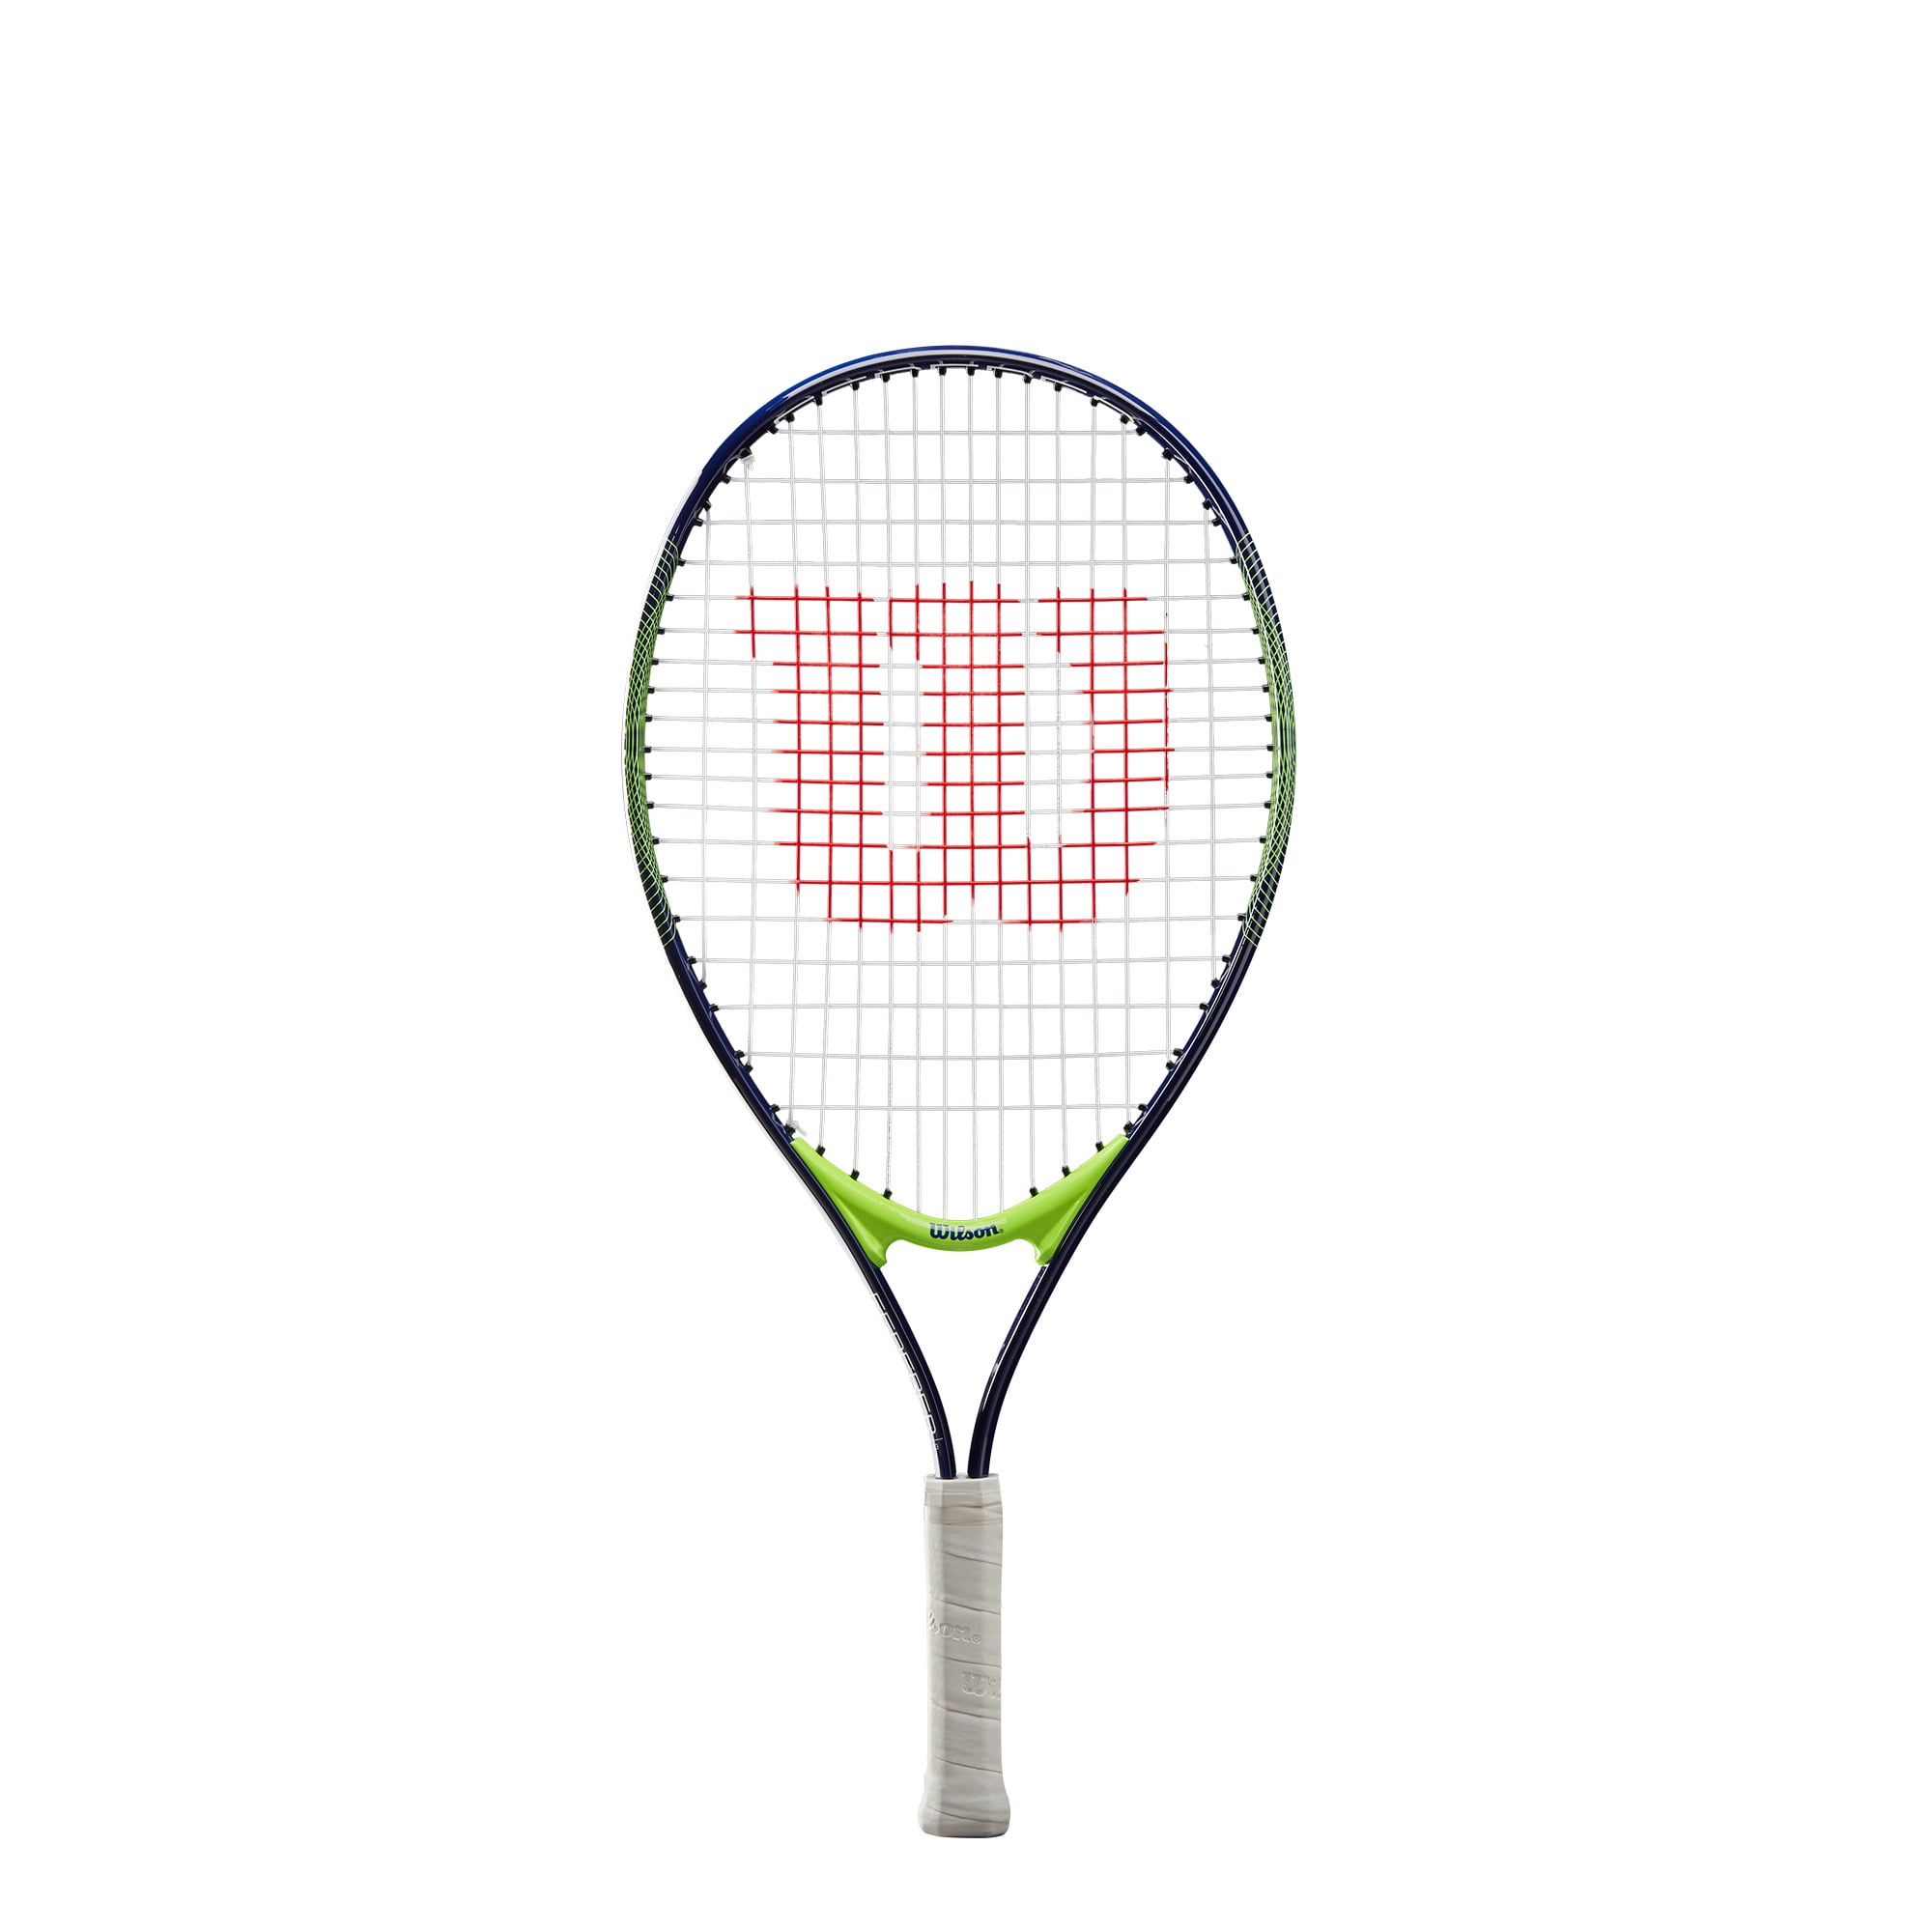 Reg $13 WILSON RIPSPIN 15 black tennis racquet string set Authorized Dealer 